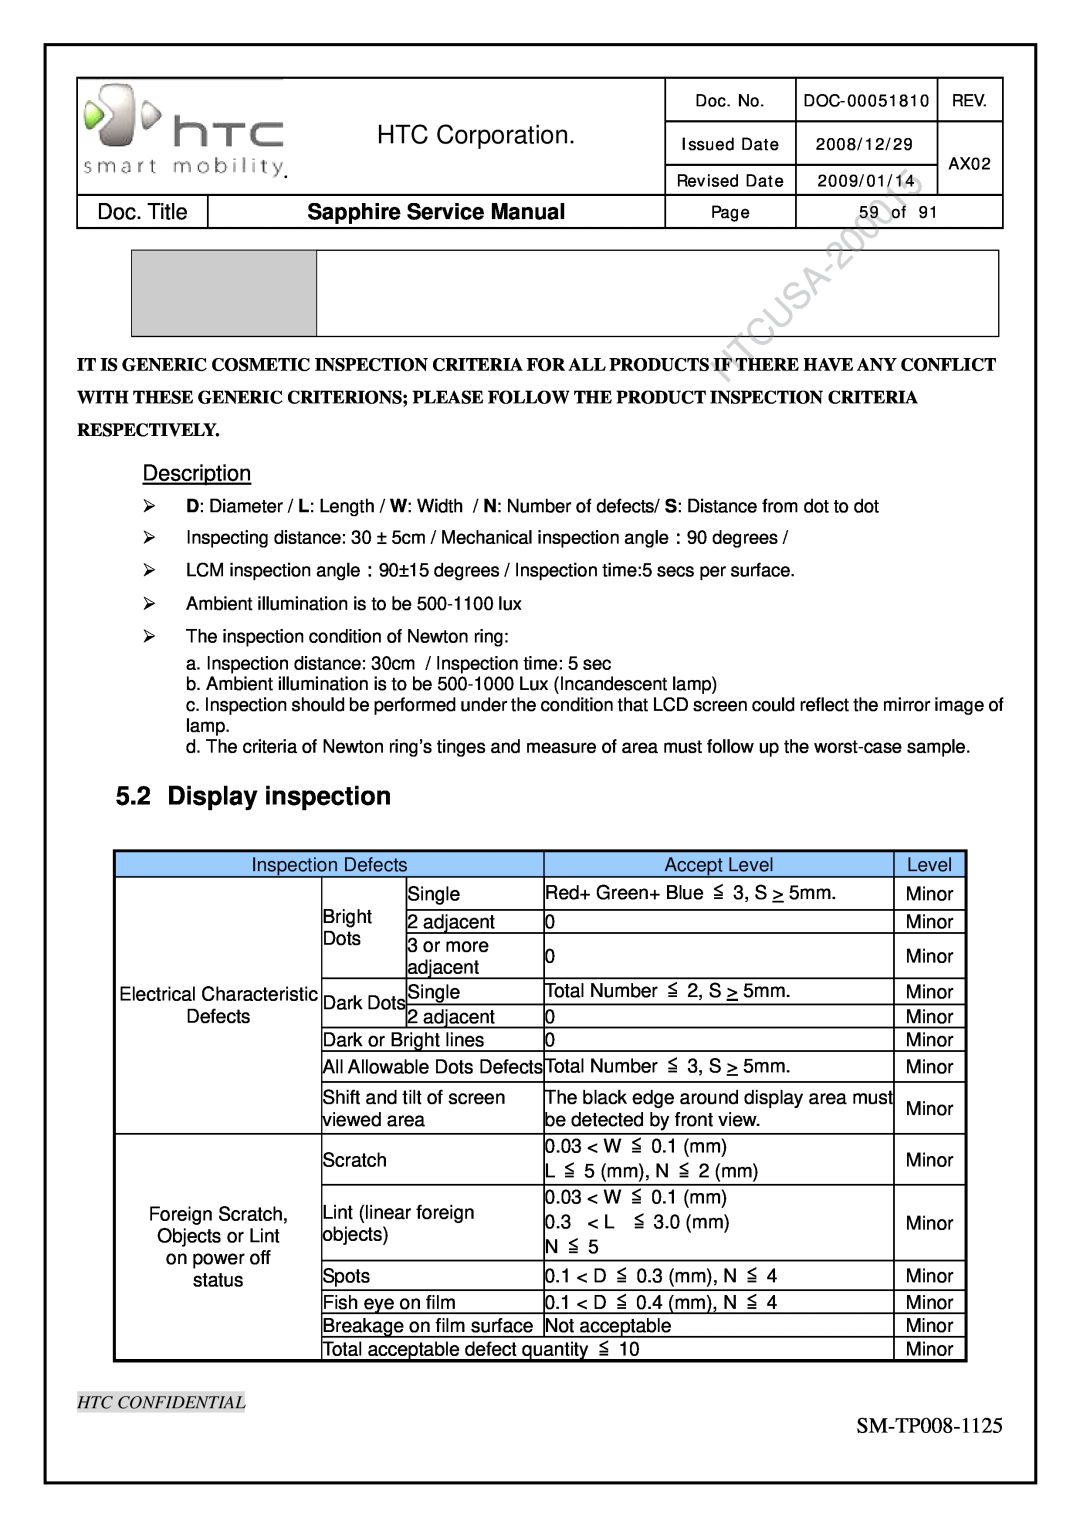 HTC SM-TP008-1125 service manual Display inspection, HTC Corporation, Sapphire Service Manual 